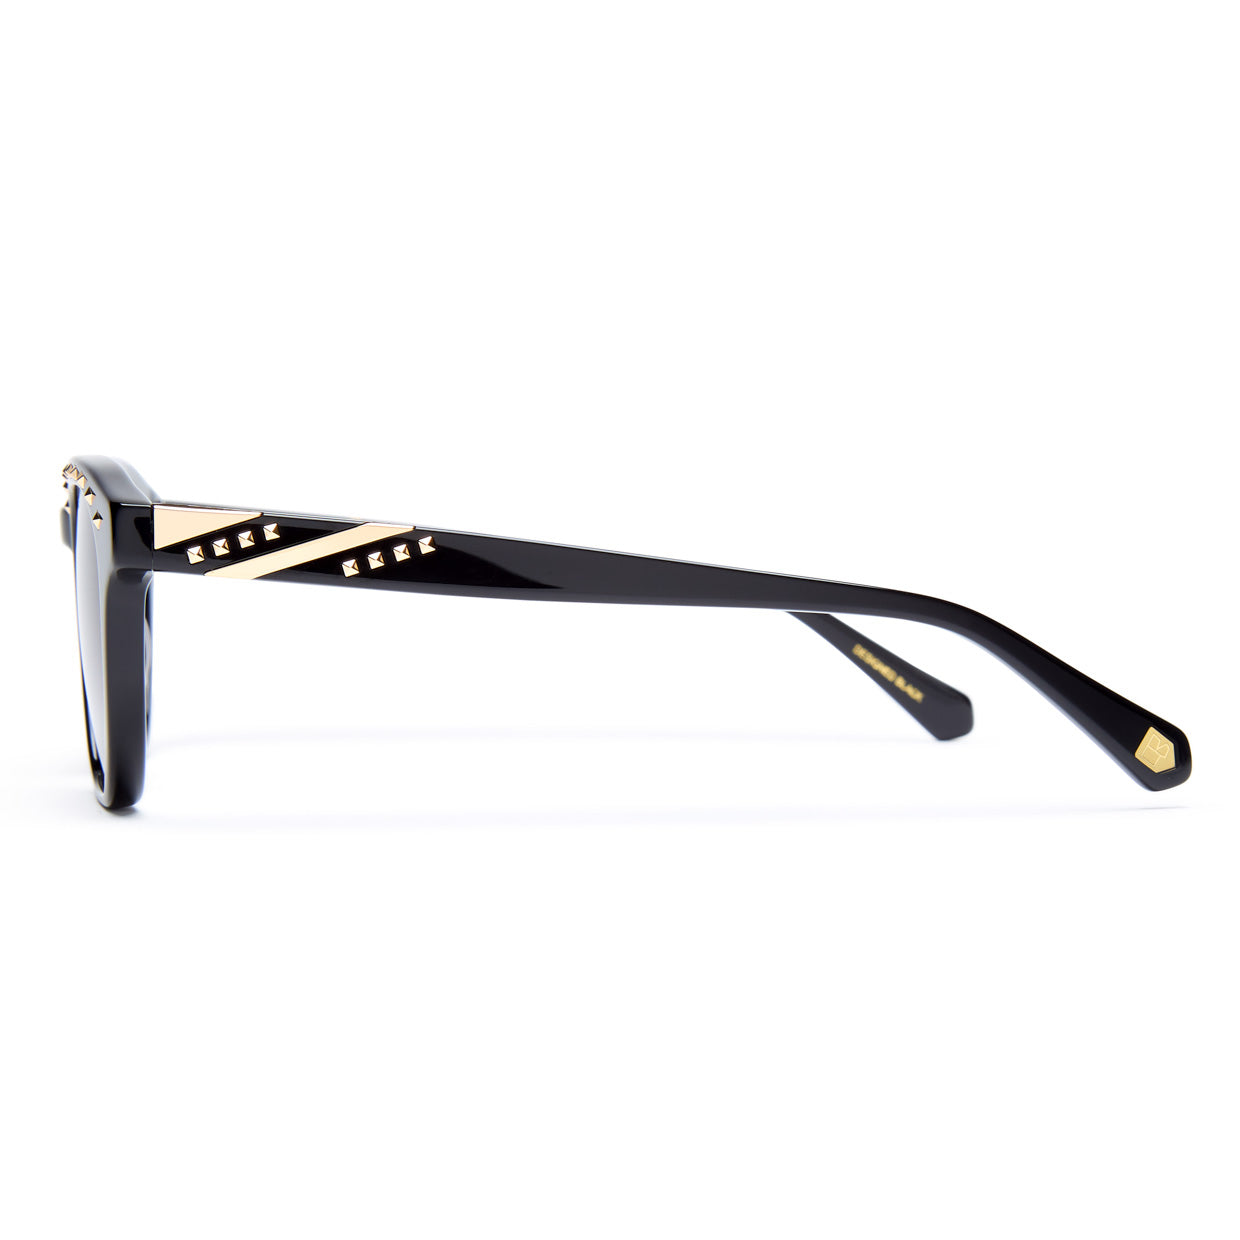 Louis Vuitton 2019 My Fair Lady Studs Sunglasses - Black